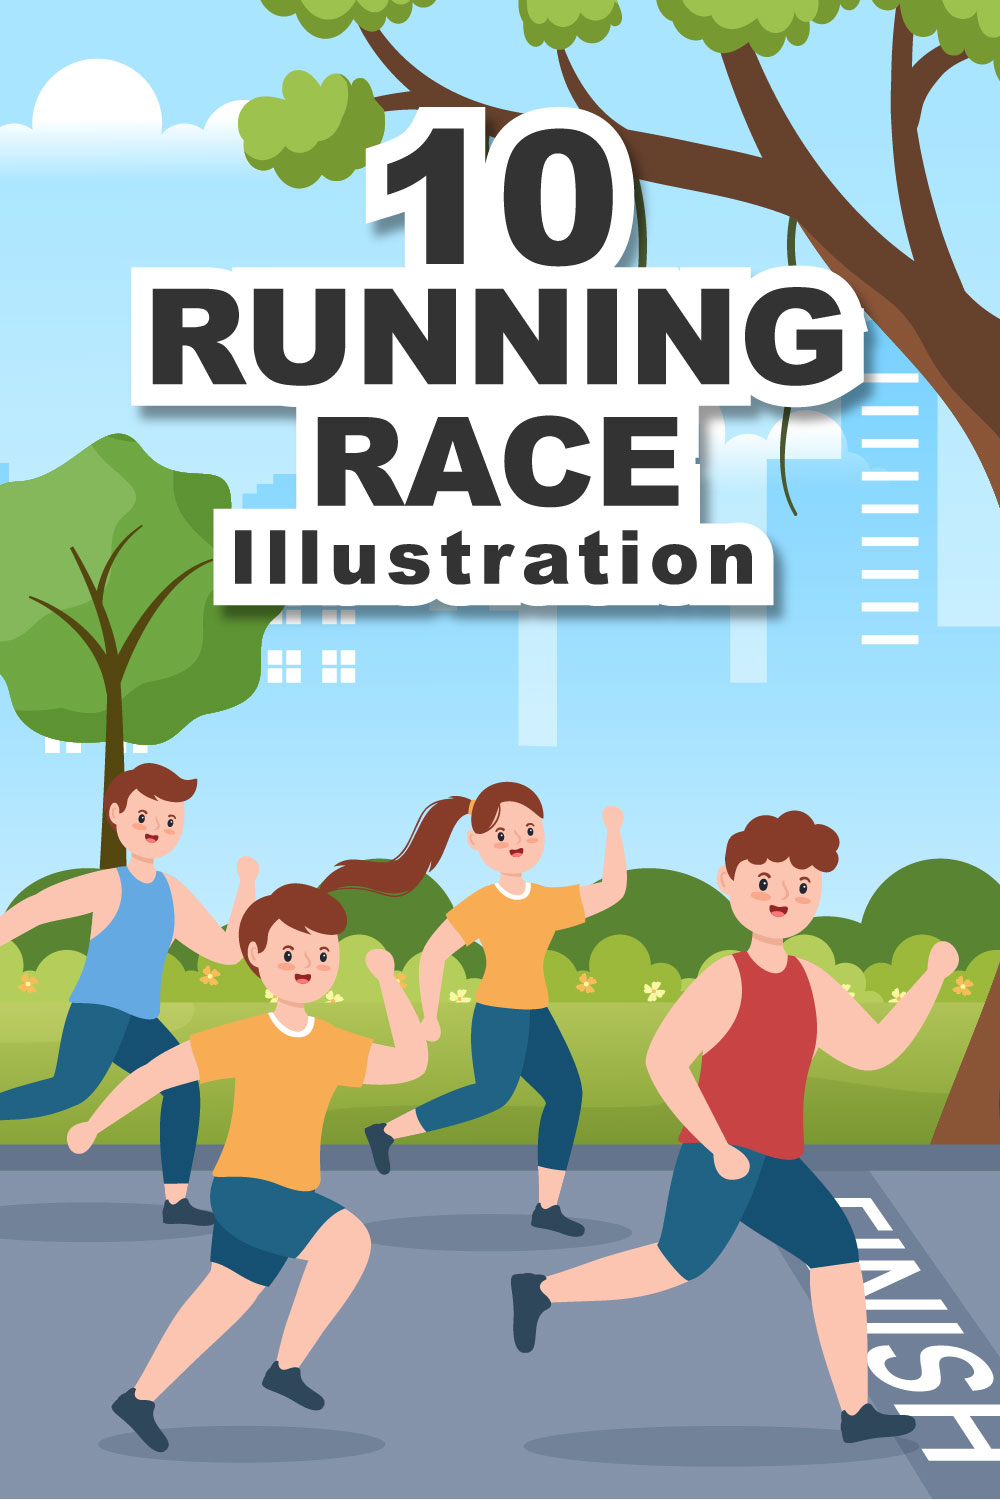 Running Race Flat Illustration Pinterest image.